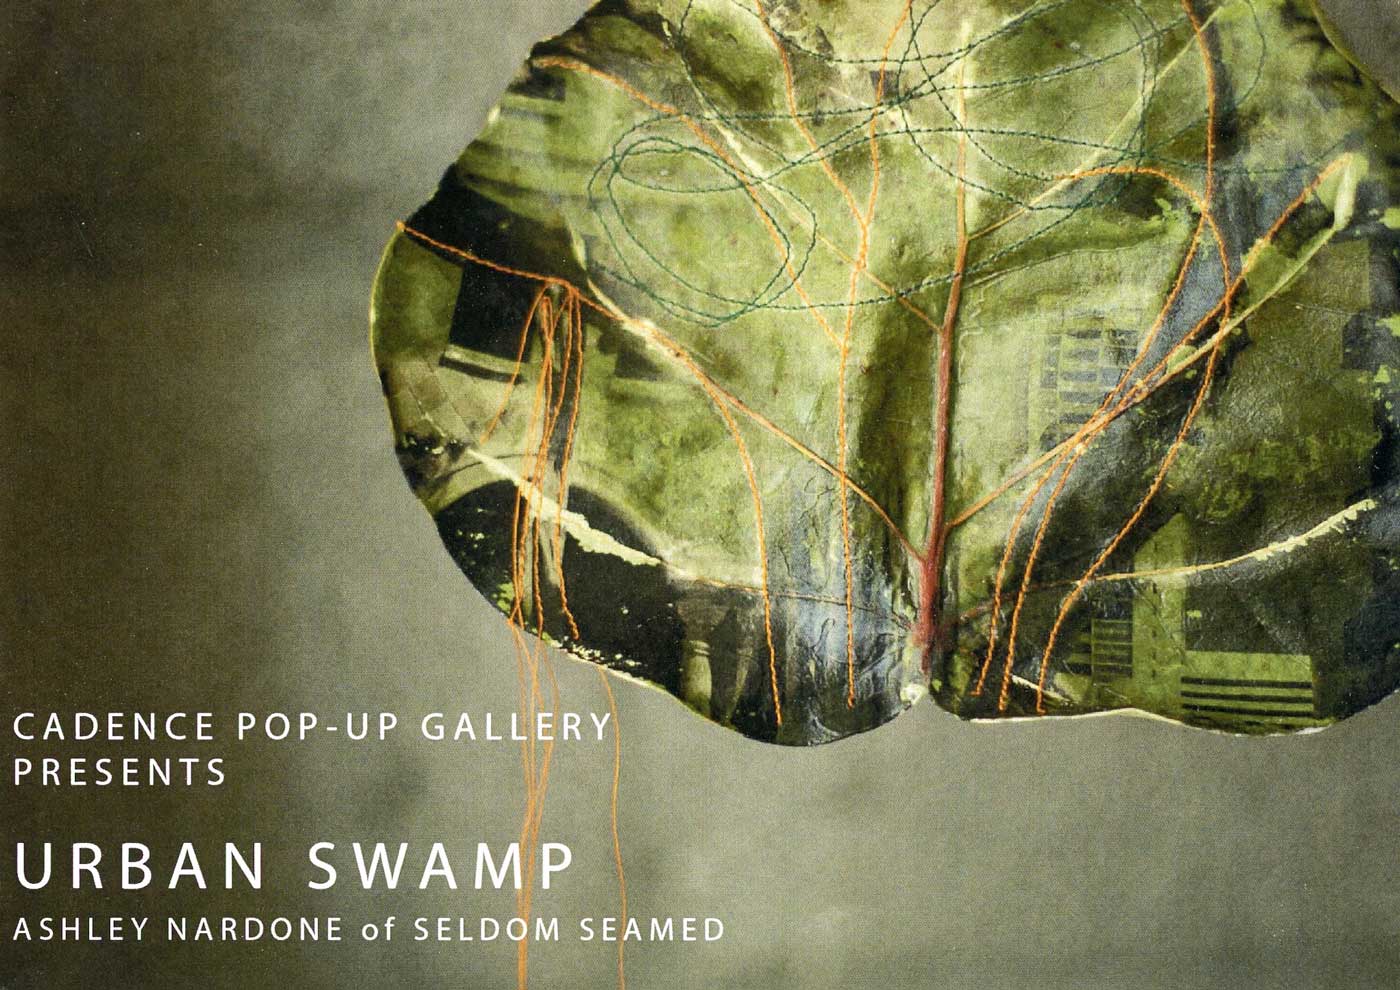 Urban Swamp Pop-up Gallery